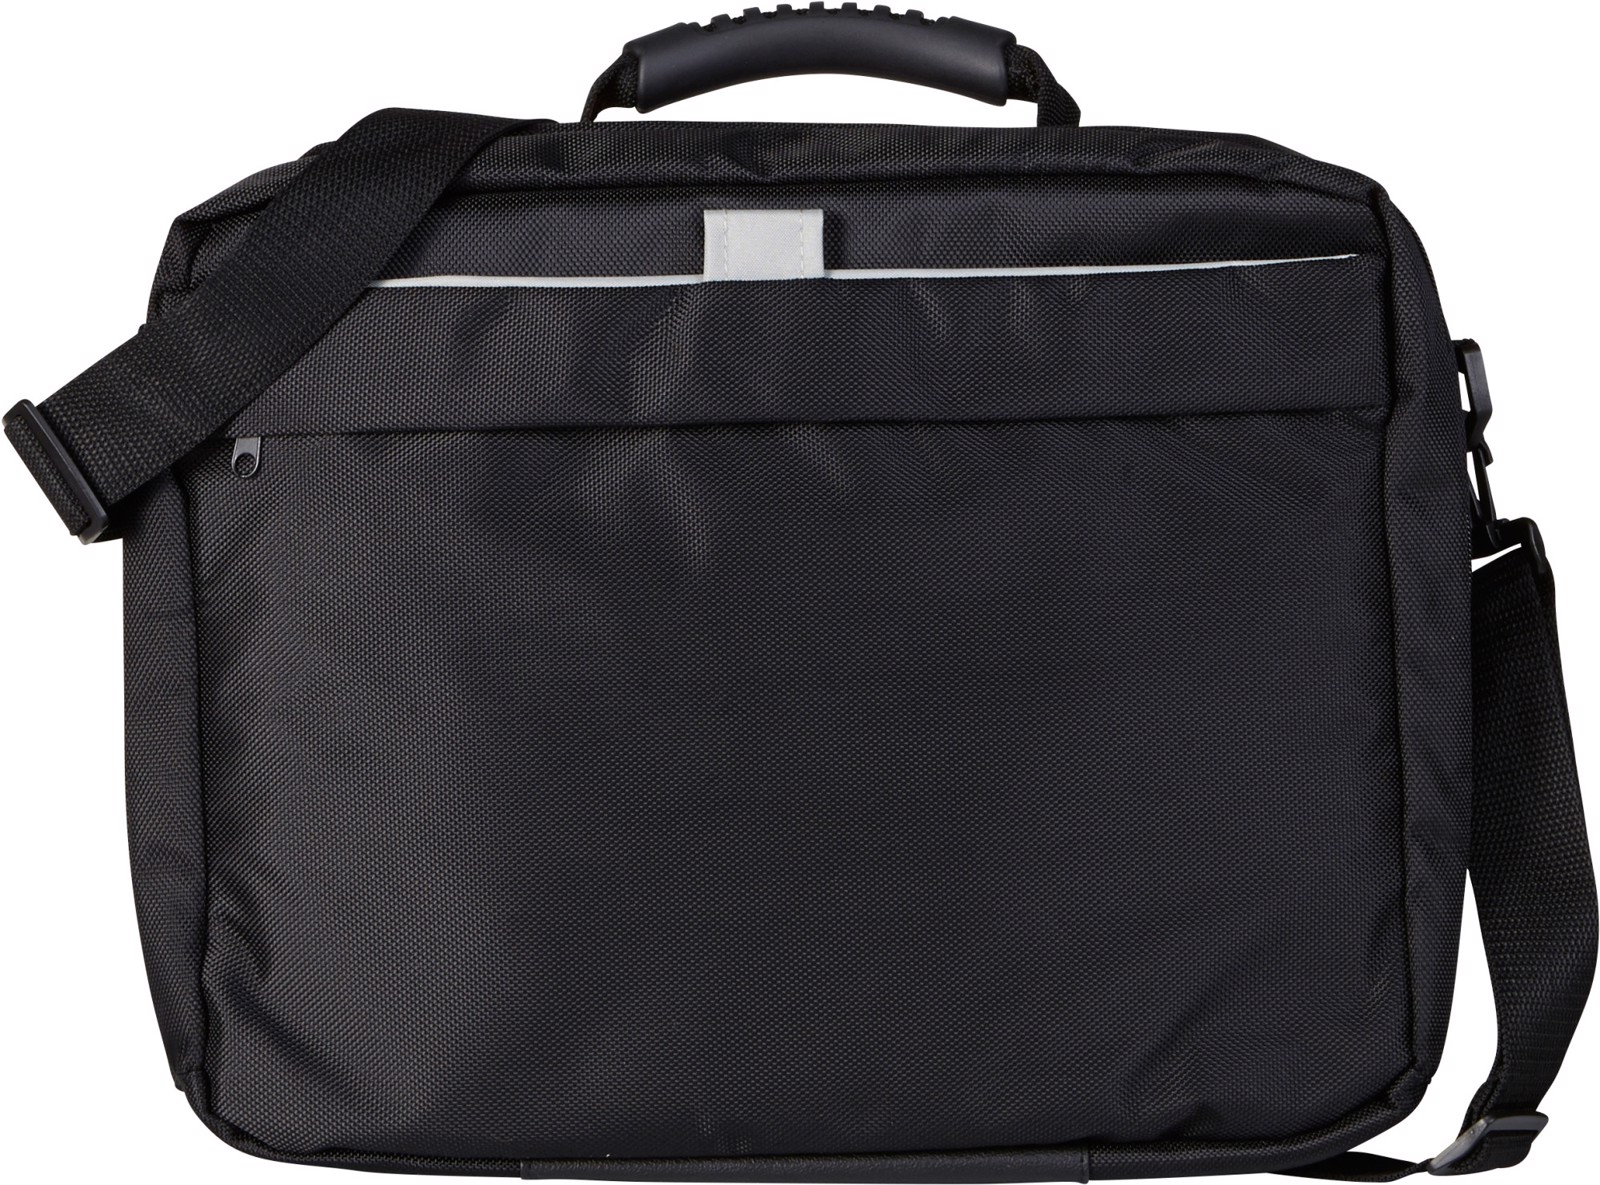 Polyester (1680D) laptop bag - Black